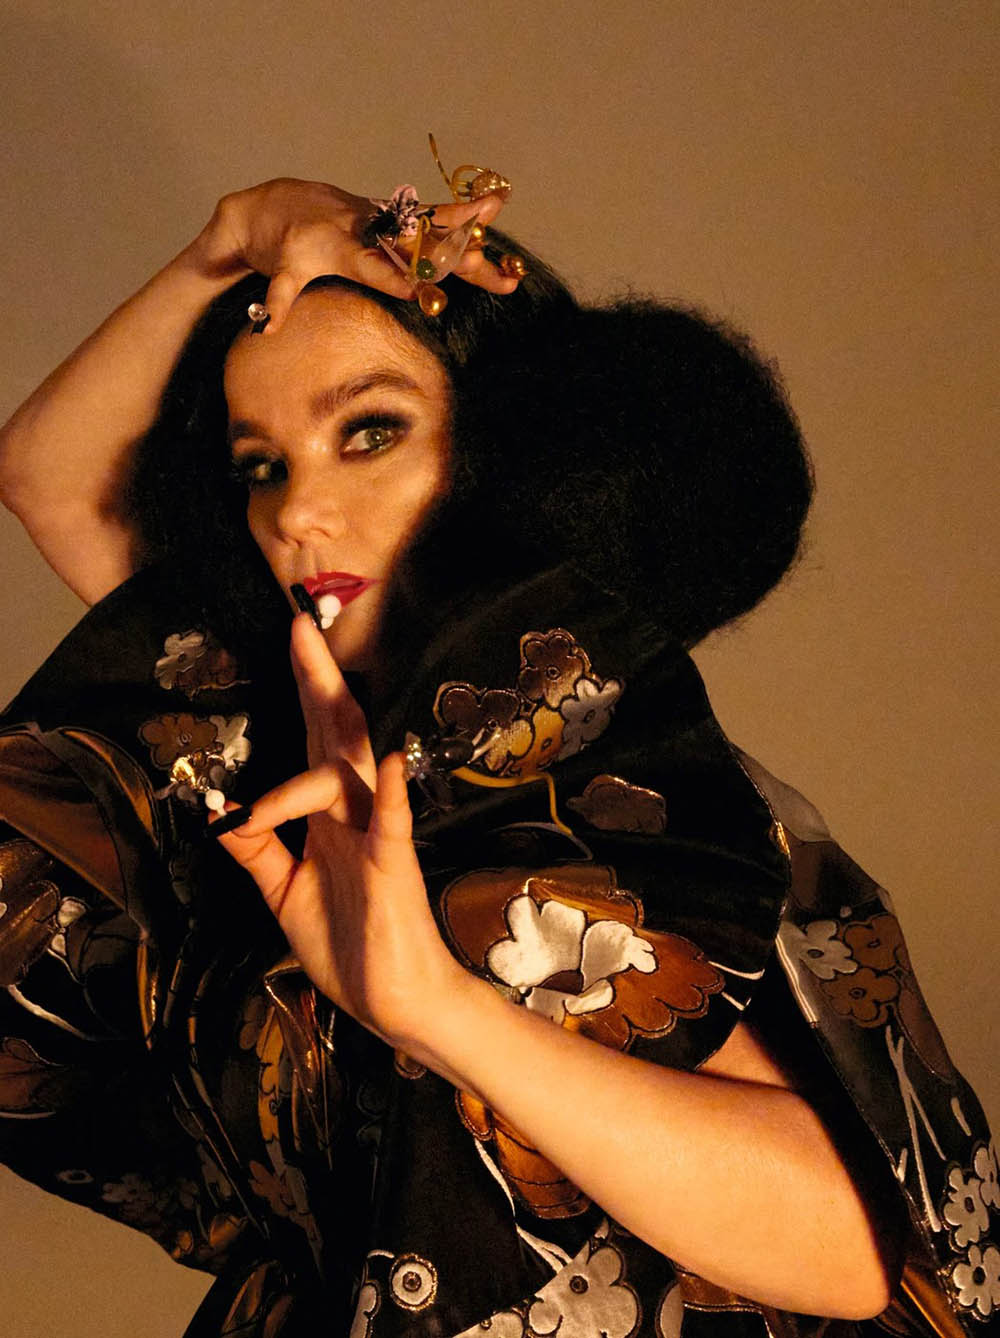 Björk and Arca cover i-D Magazine Winter 2020 by Mert & Marcus